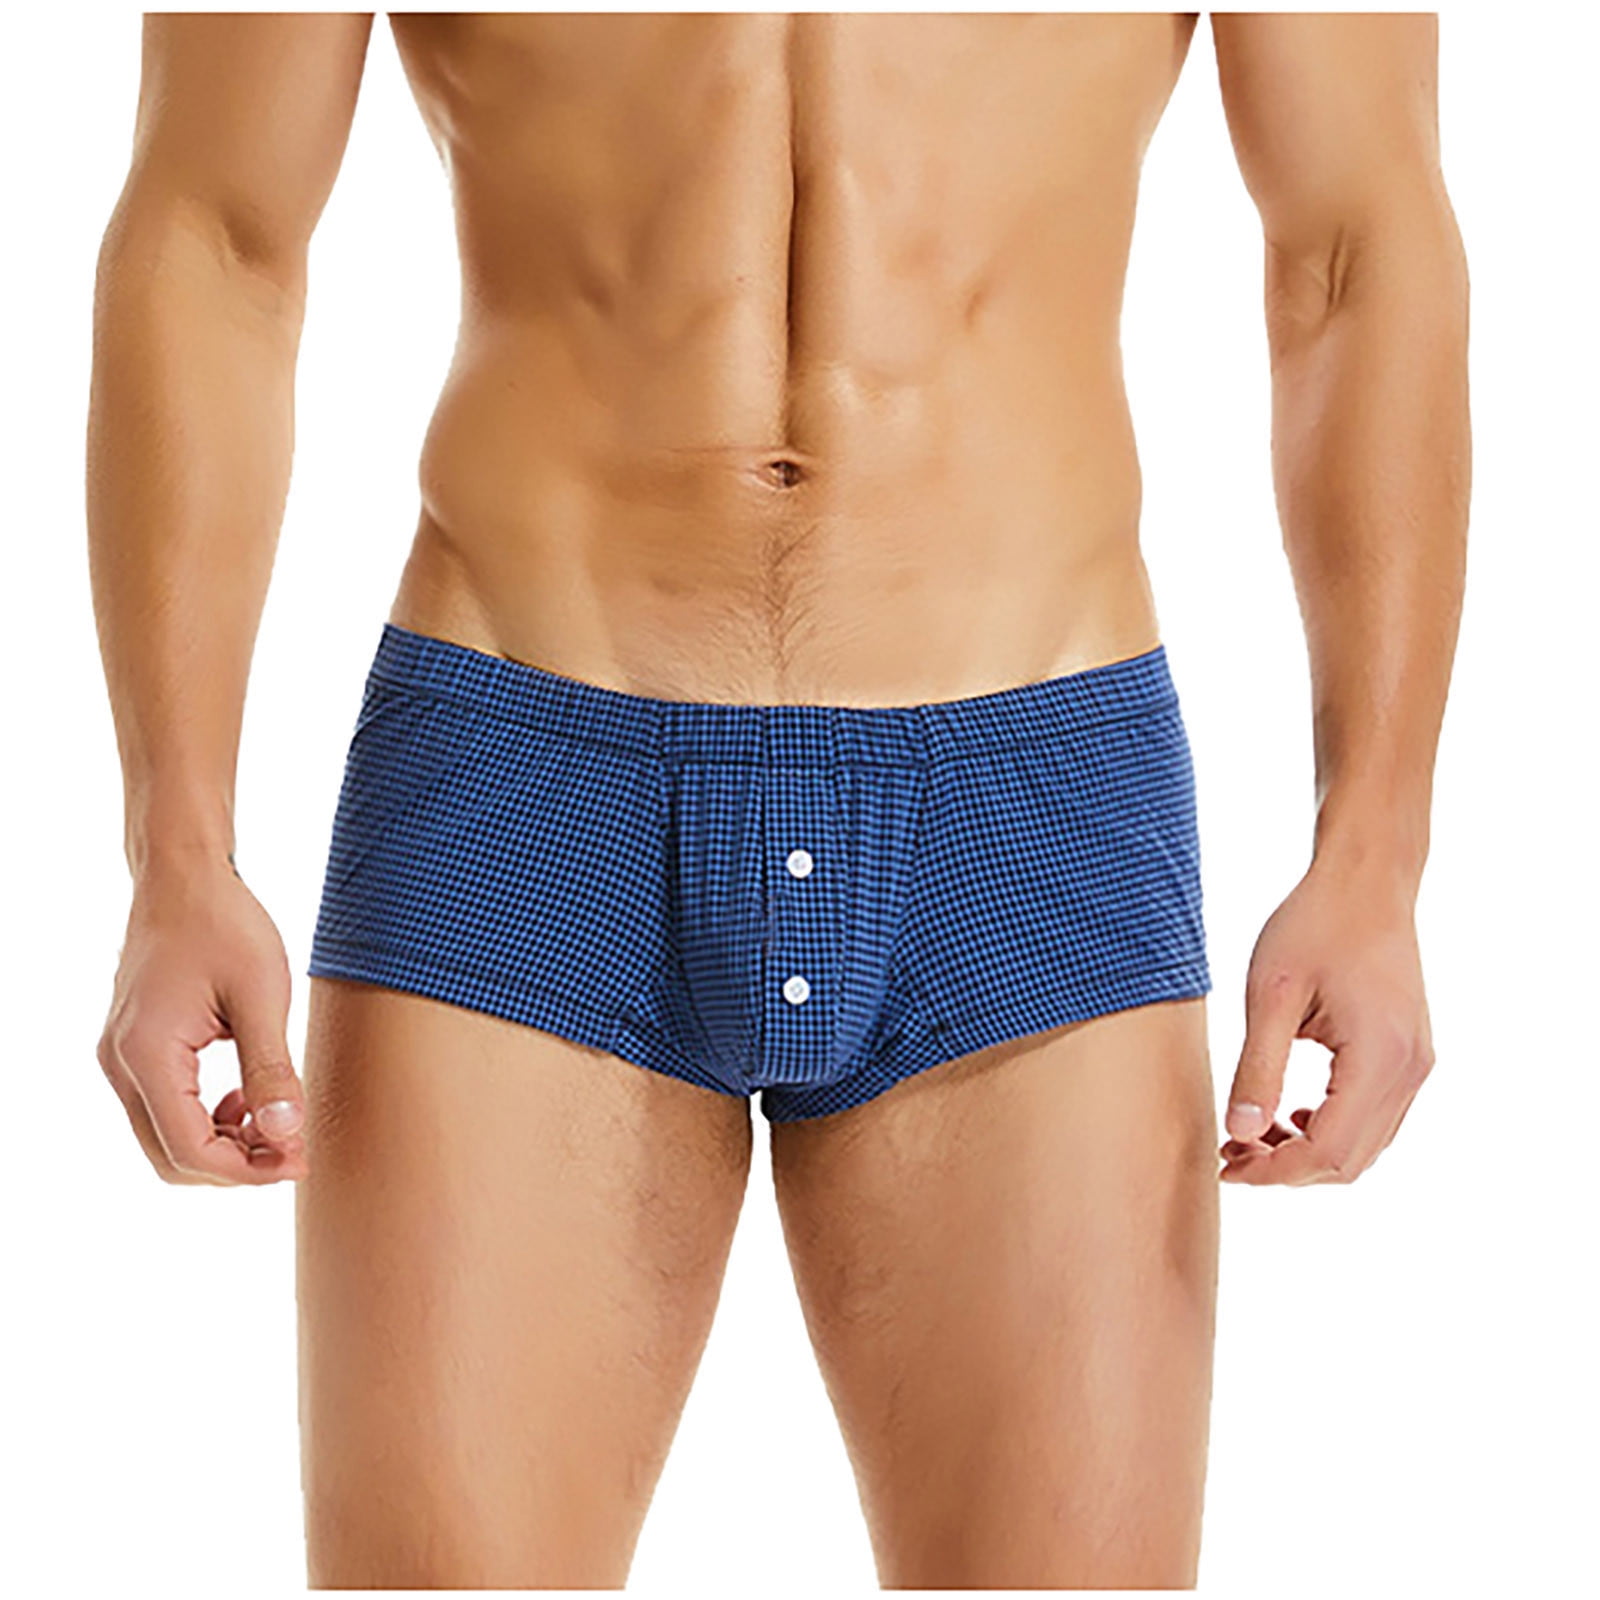 TIHLMKi Men's Underwear Deals Clearance Under $10 Men Softty Camouflag  Print Underpants Knickers Boxers Low Waist Underwears